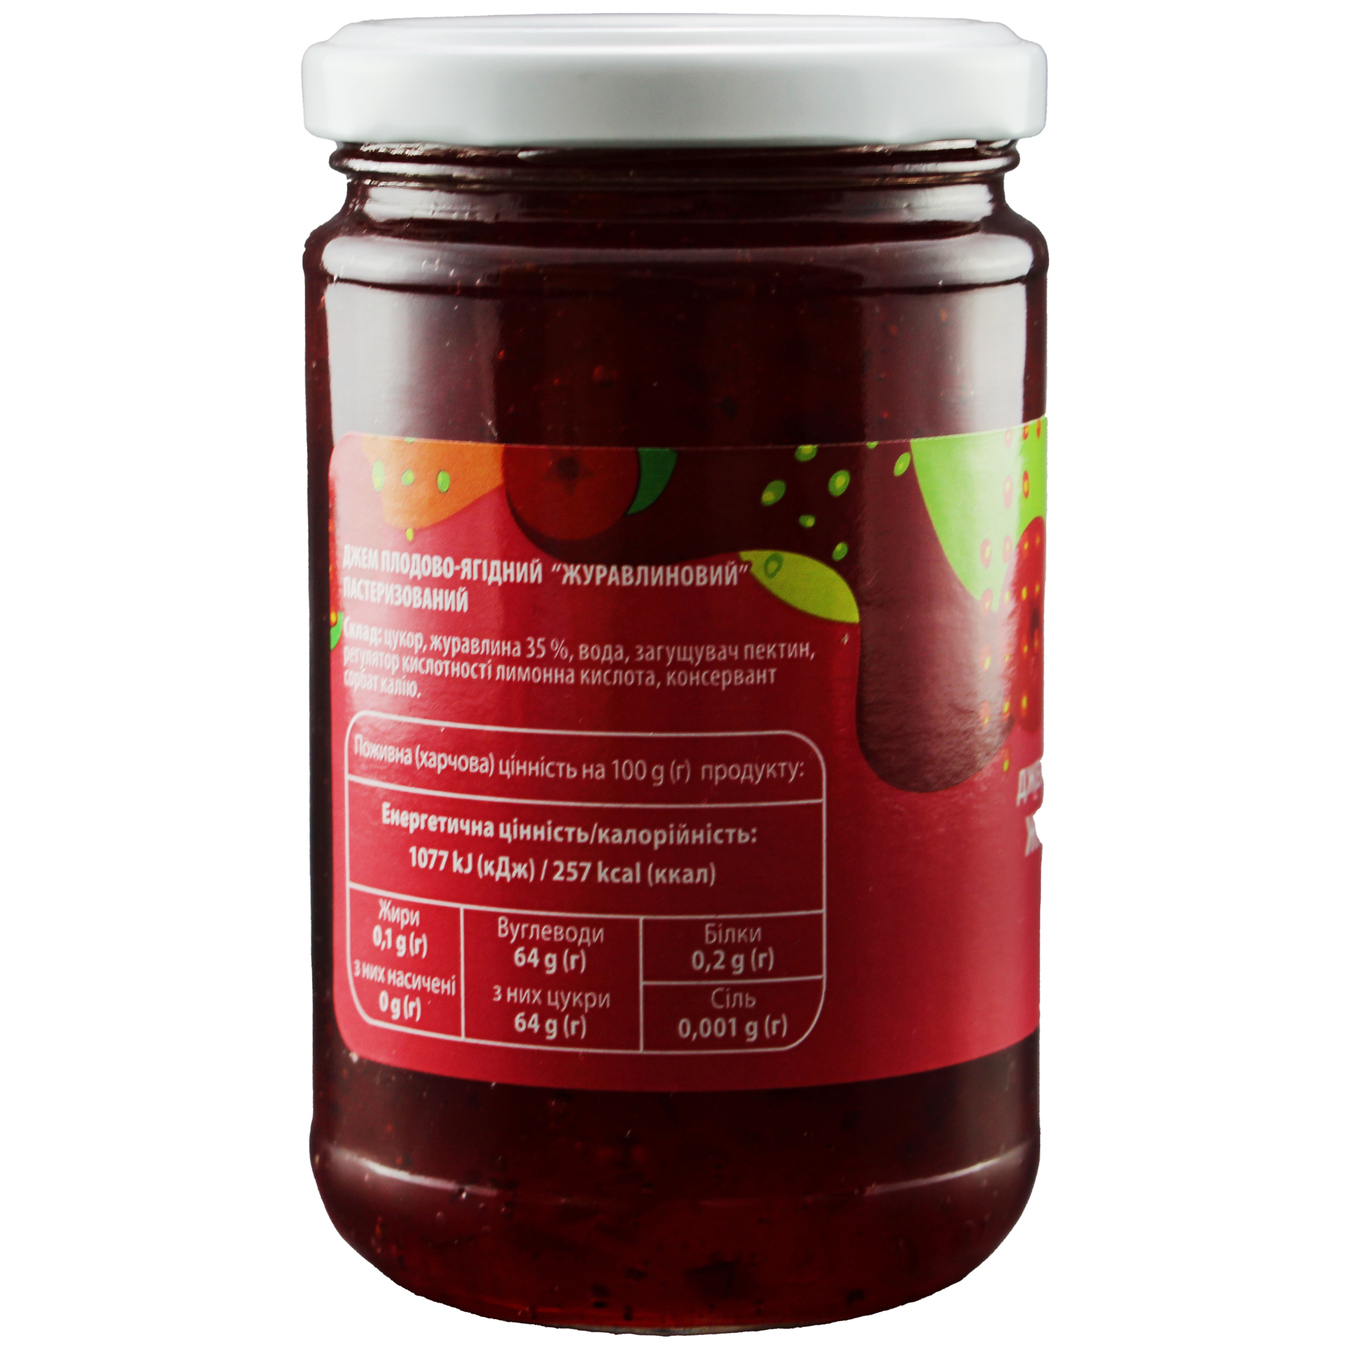 NOVUS Cranberry Jam 375g 4